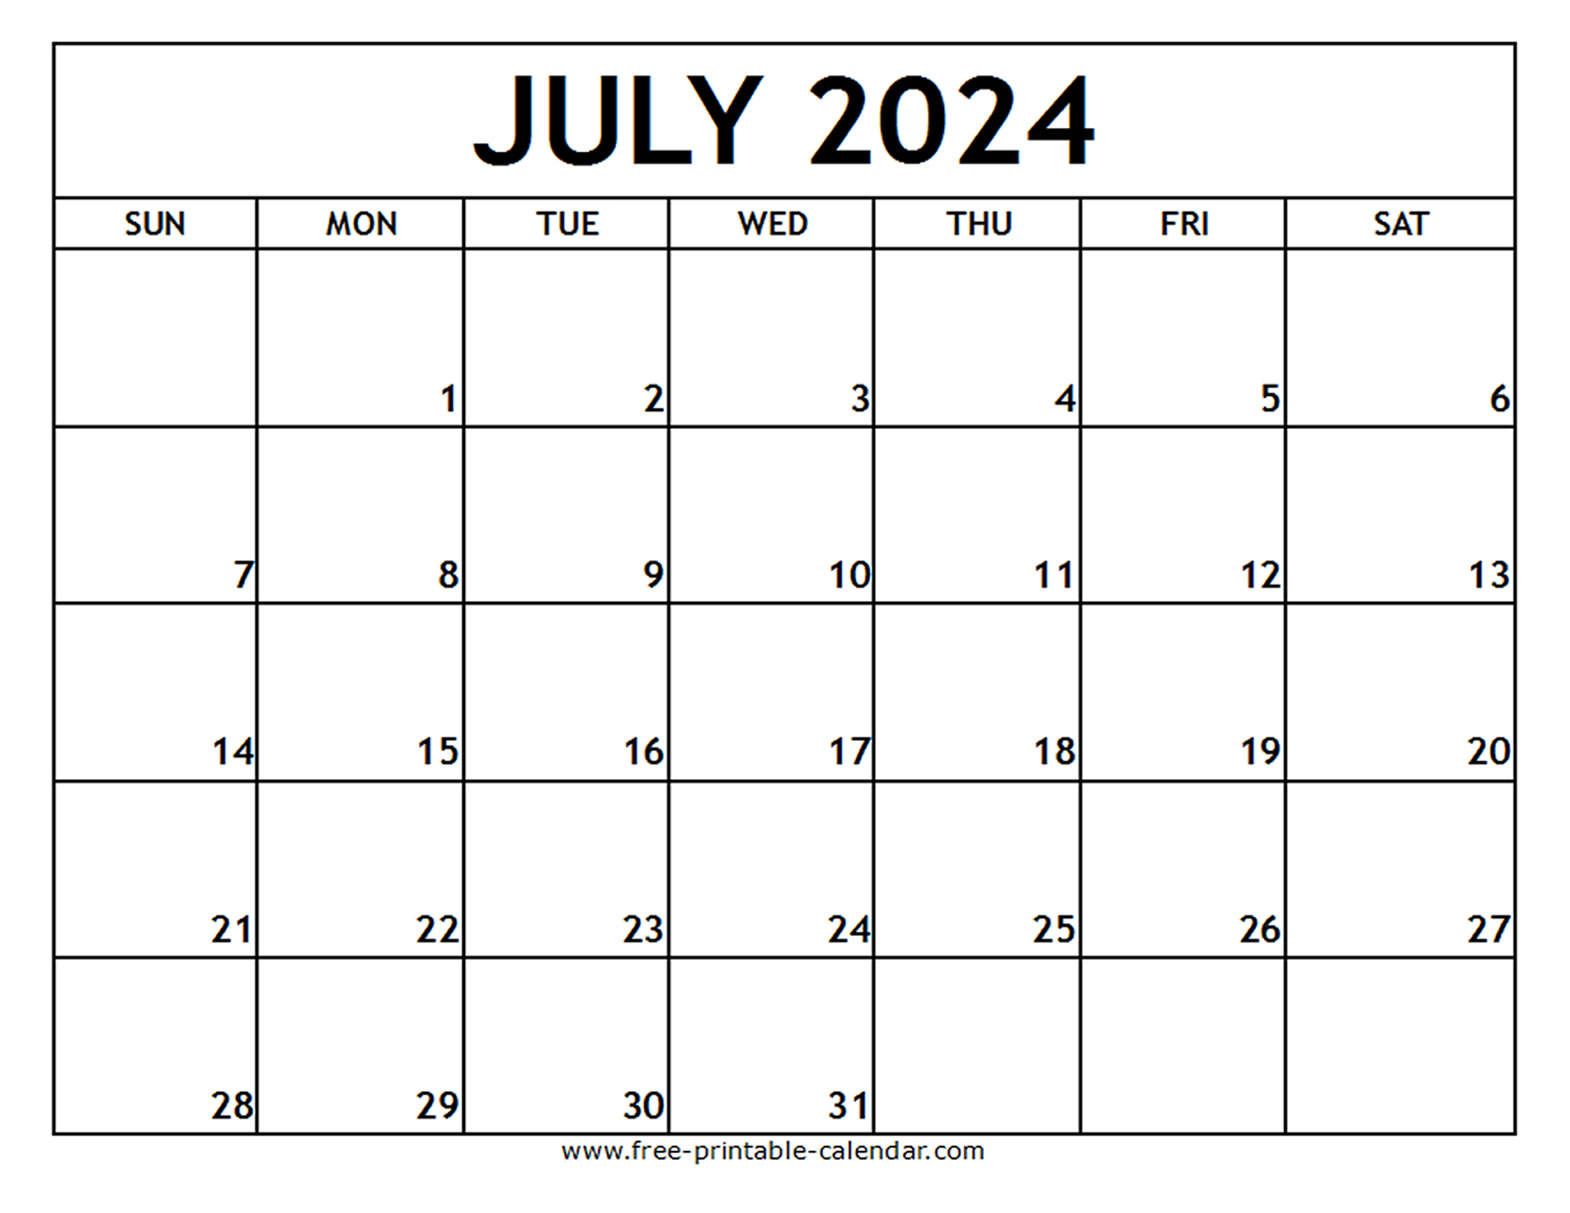 July 2024 Printable Calendar - Free-Printable-Calendar | Free Printable July Calendar 2024